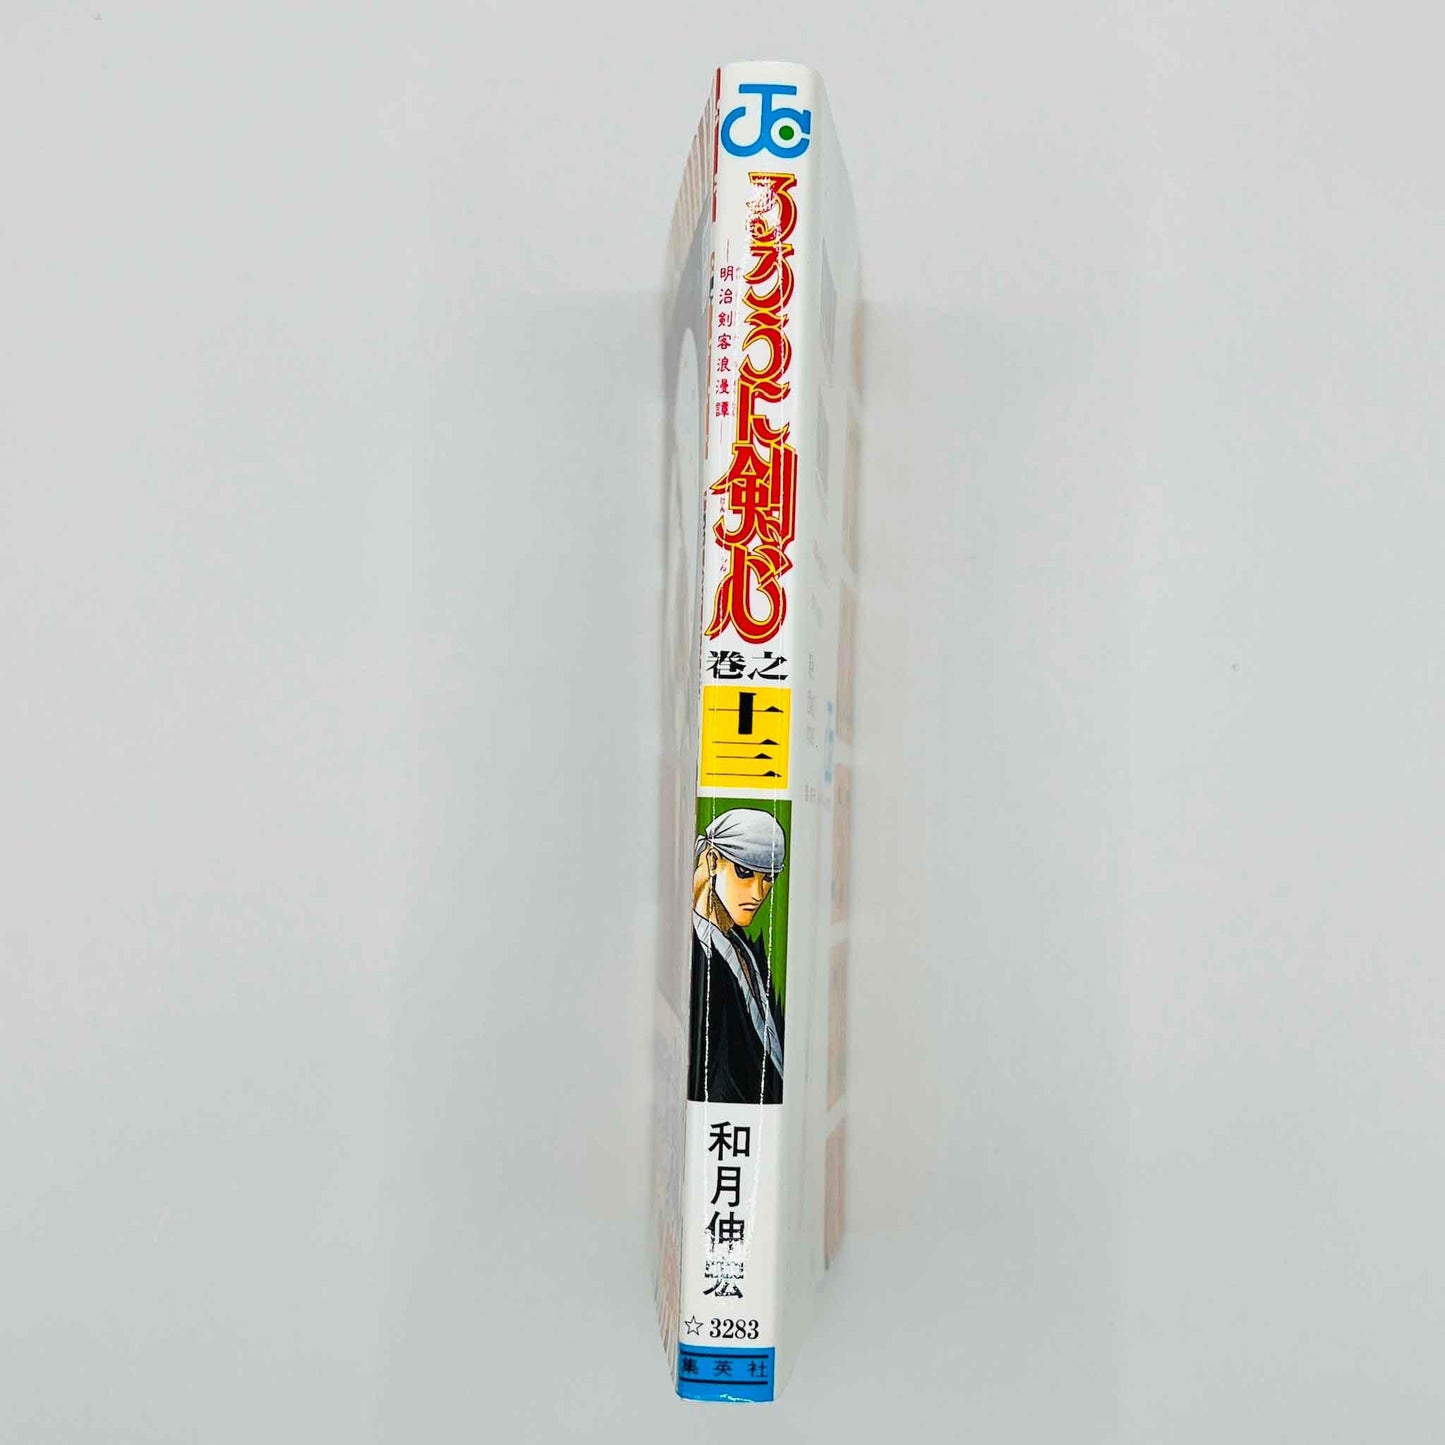 Rurouni Kenshin - Volume 13 - 1stPrint.net - 1st First Print Edition Manga Store - M-KENSH-13-001